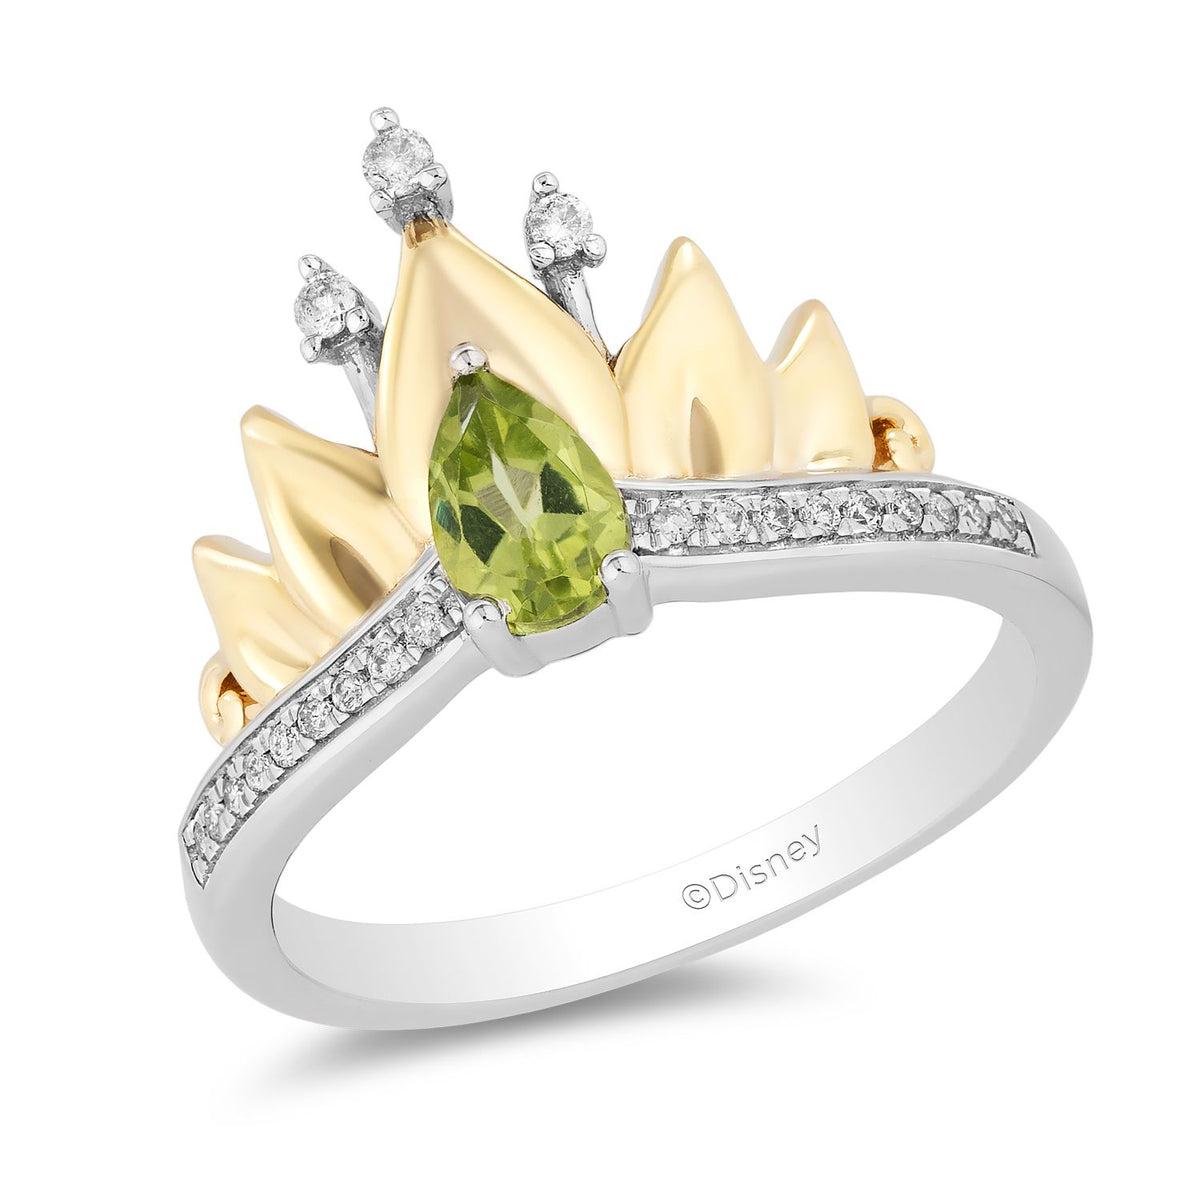 My Princess Tiara Ring in Pandora Rose™ with CZ | Rose gold plated |  Pandora US